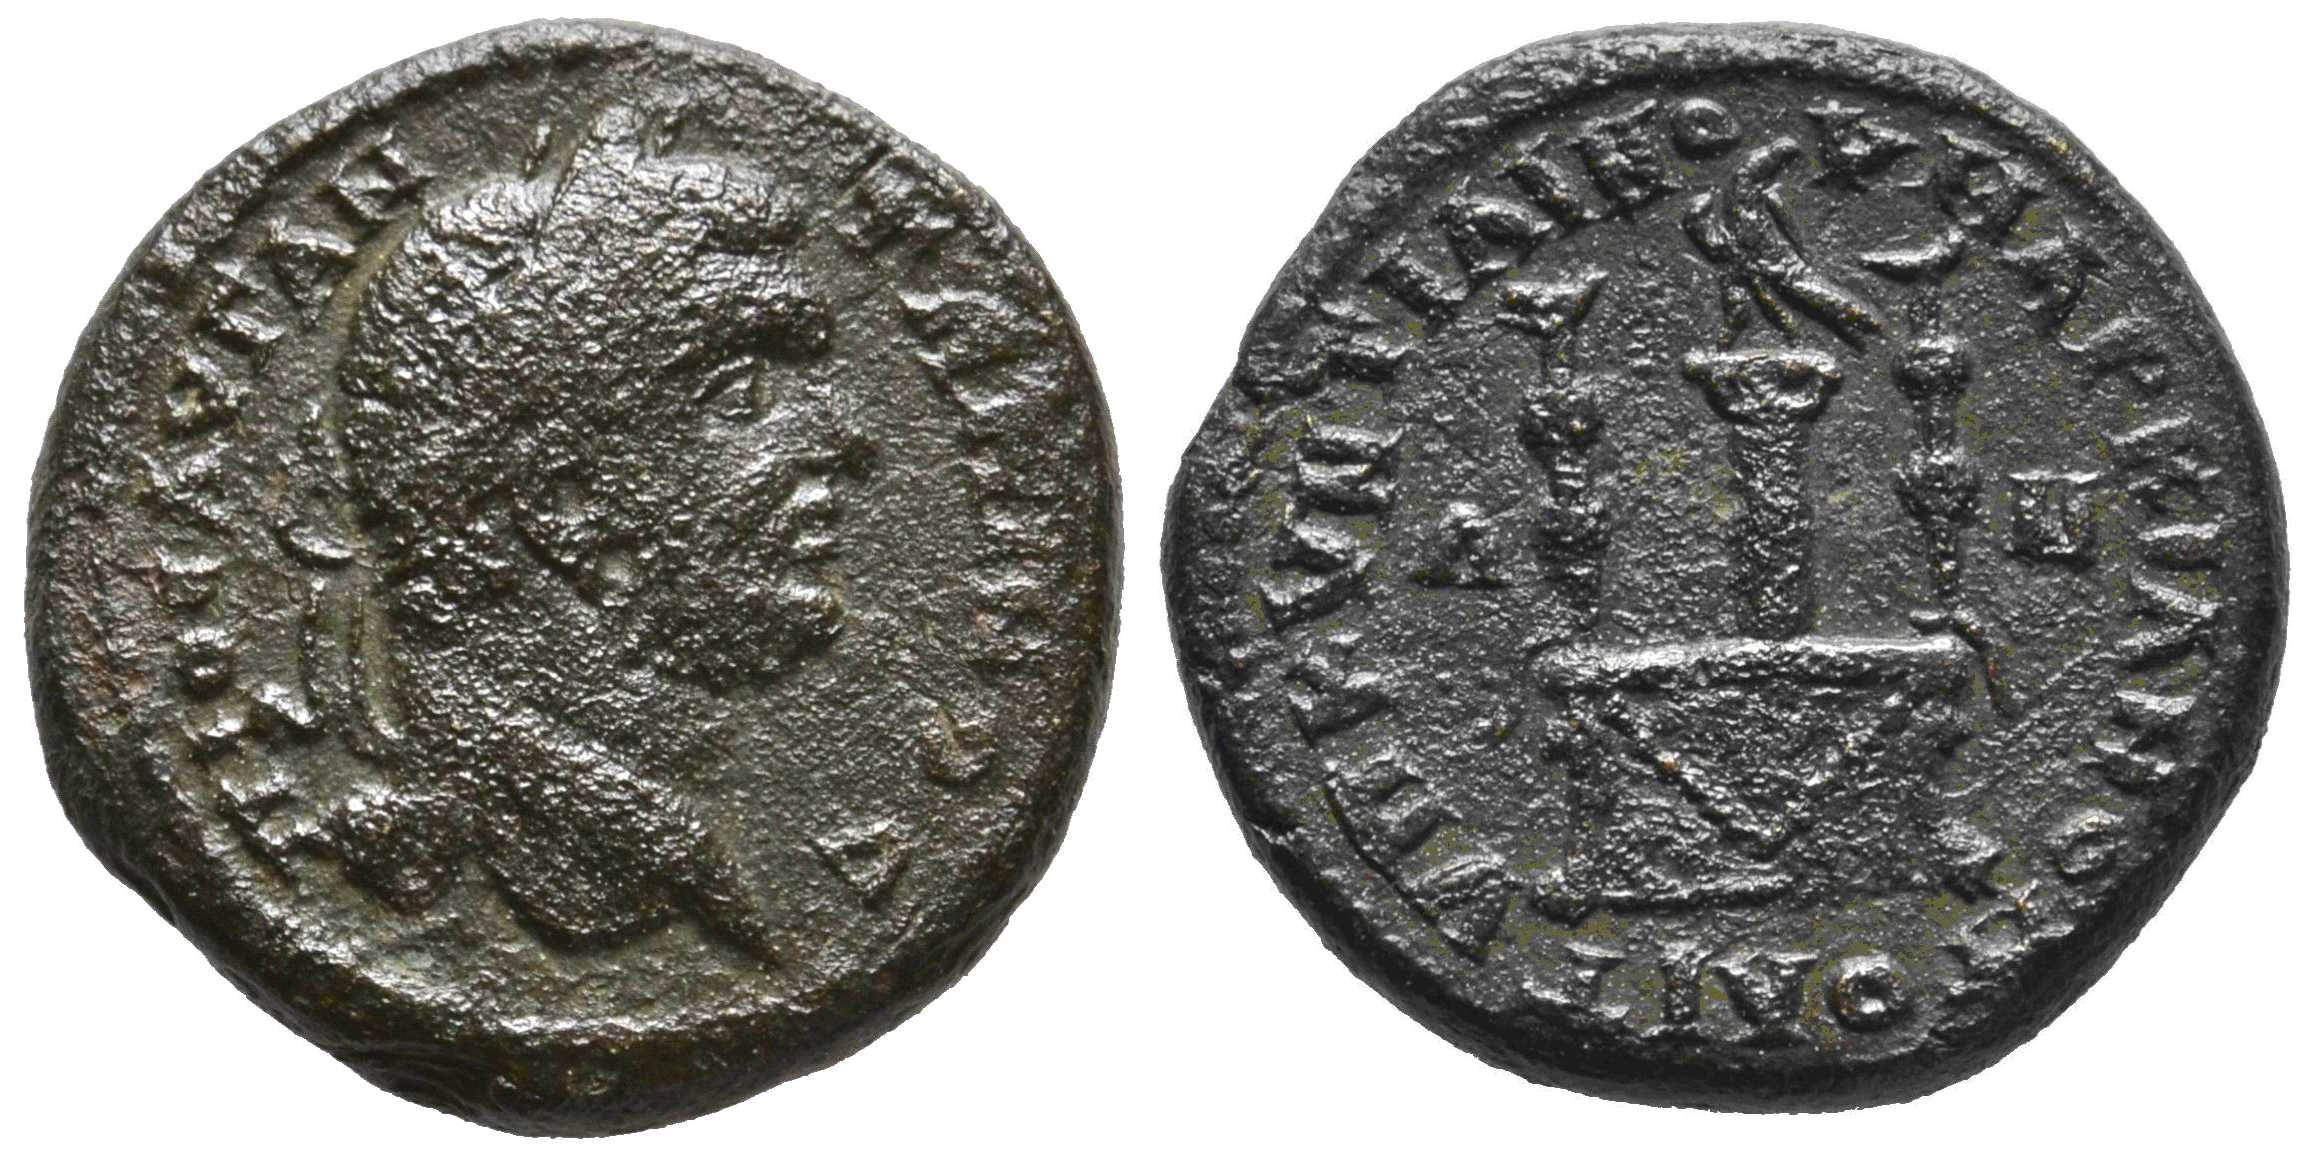 6022 Marcianopolis Moesia Inferior Caracalla AE